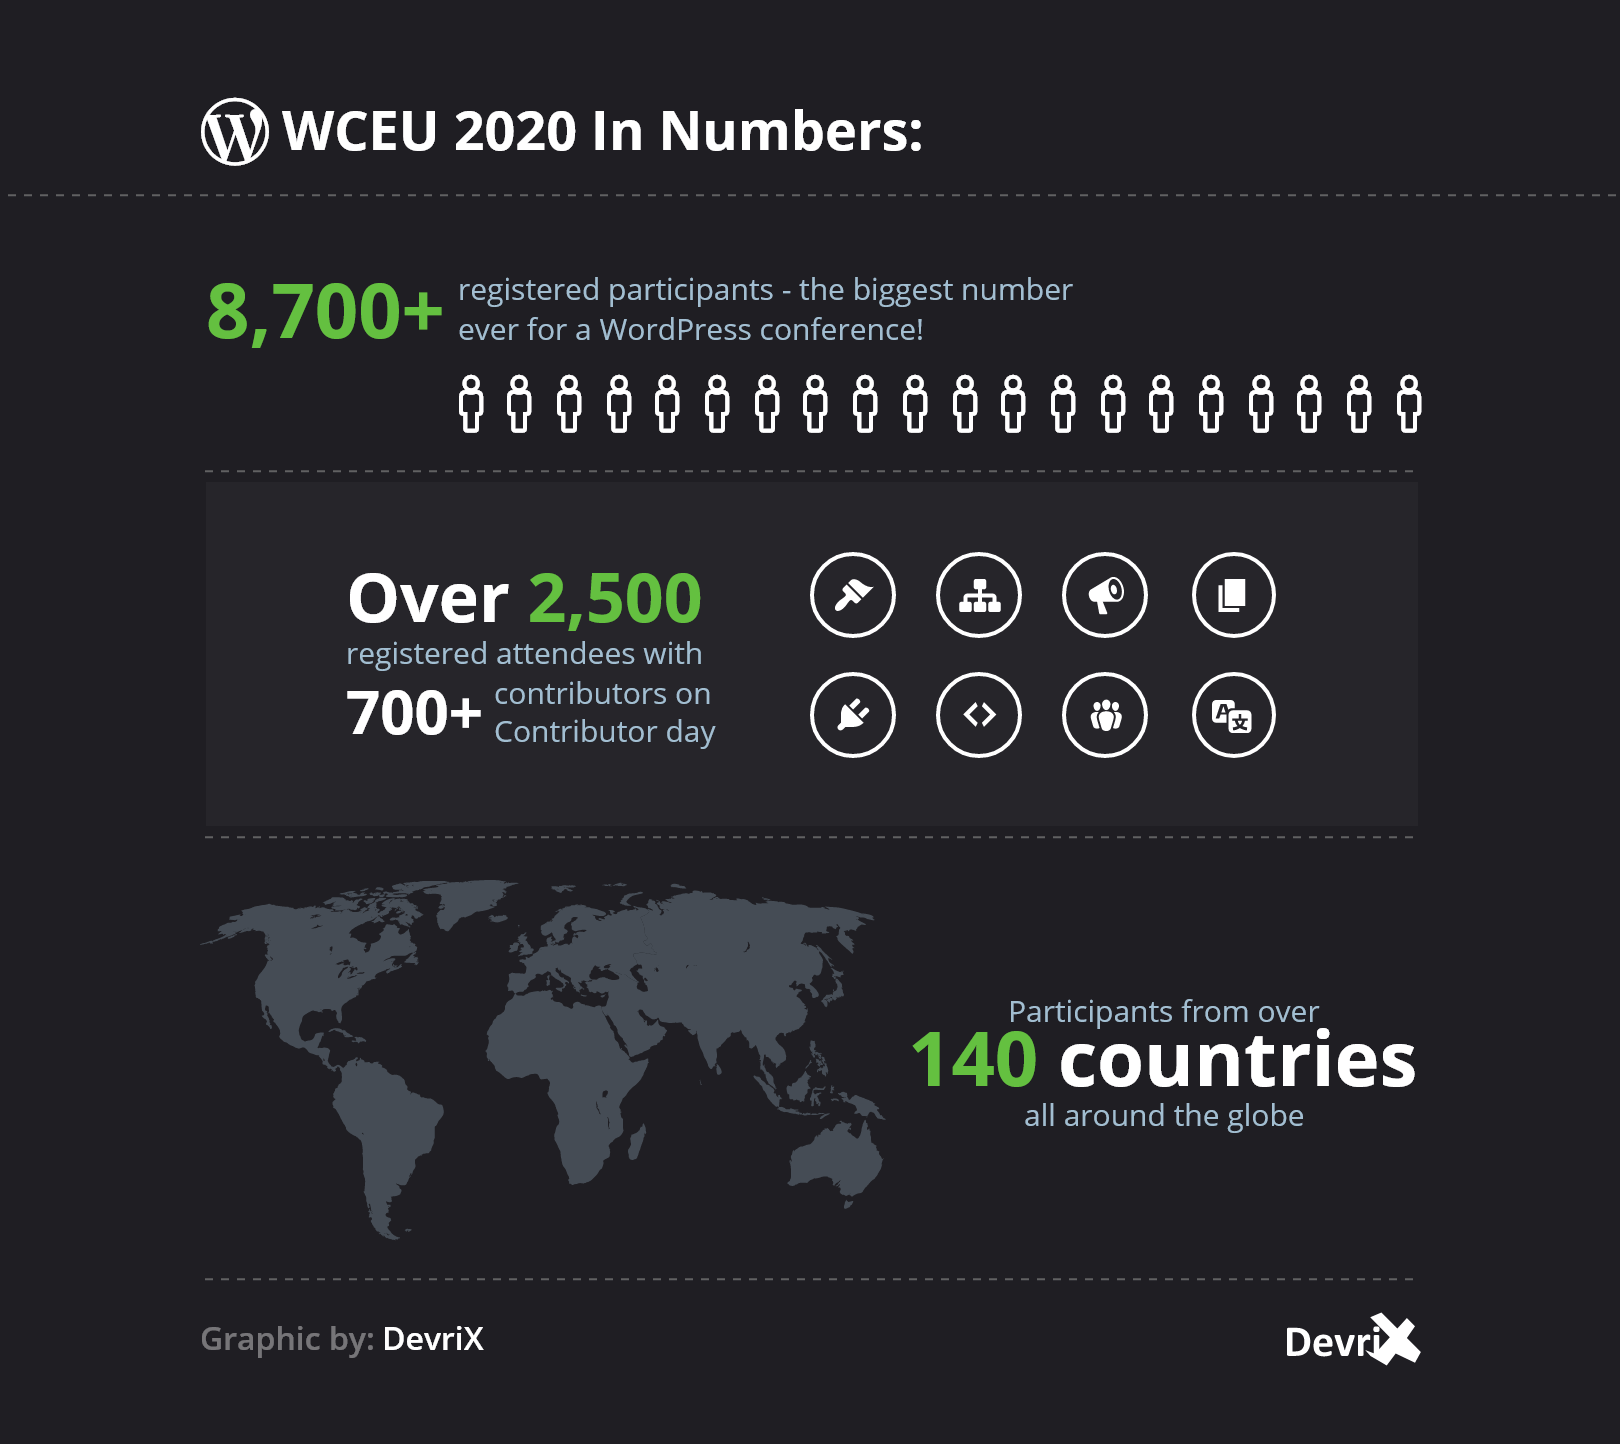 WCEU 2020 in numbers